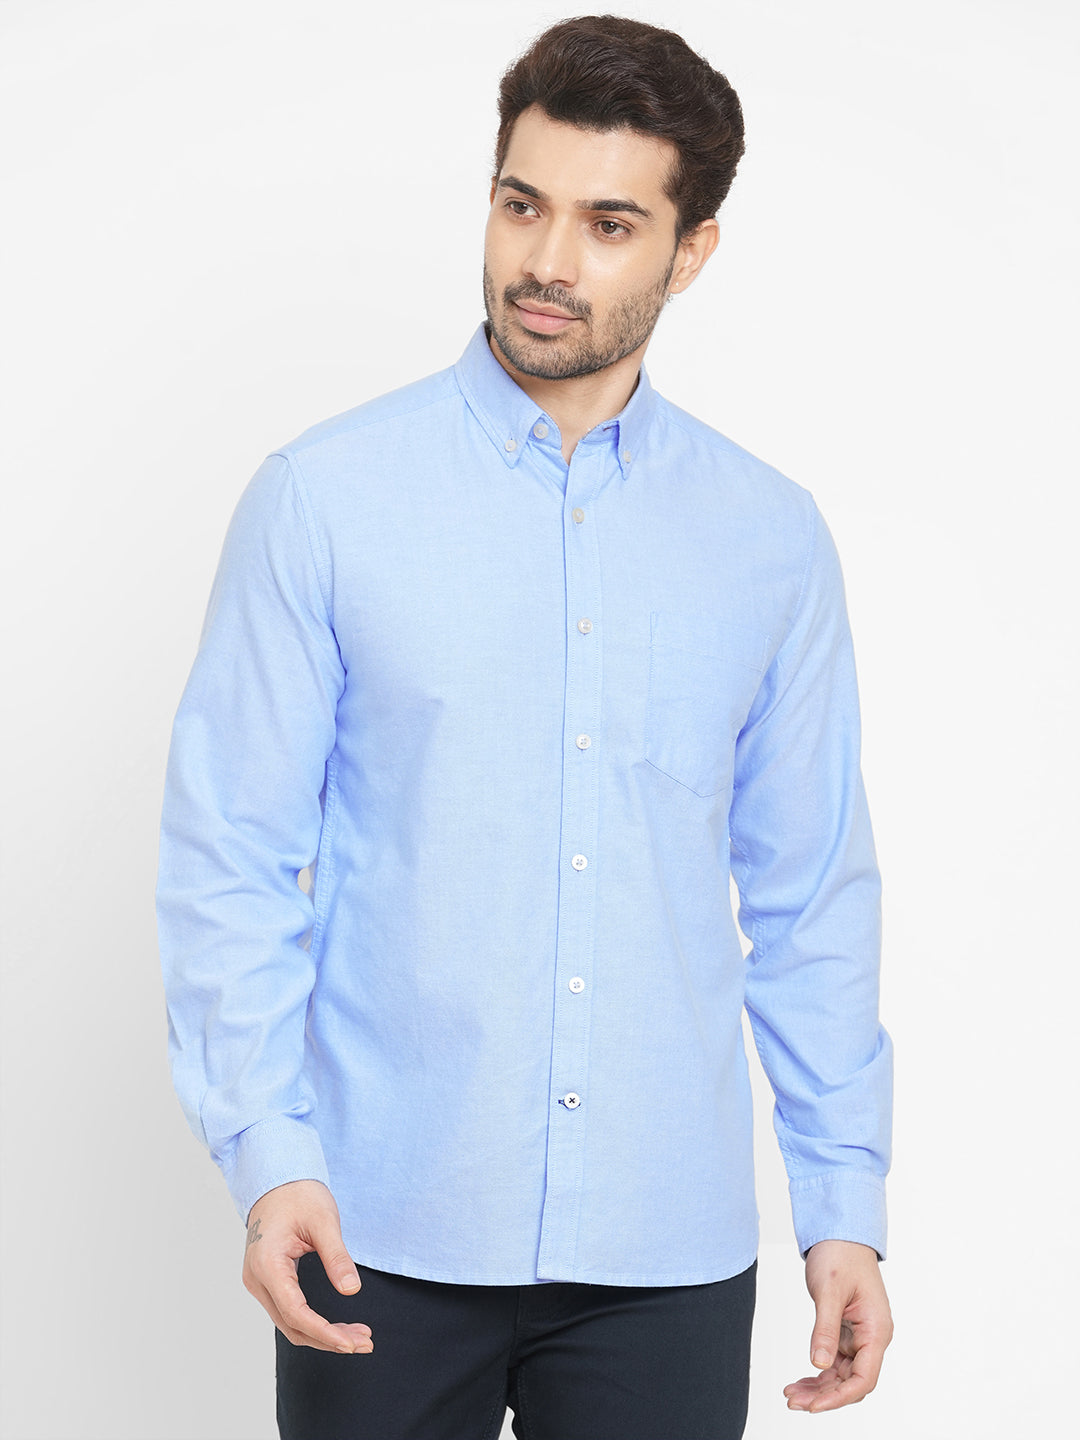 Men's Oxford Blue Cotton Regular Fit Shirt